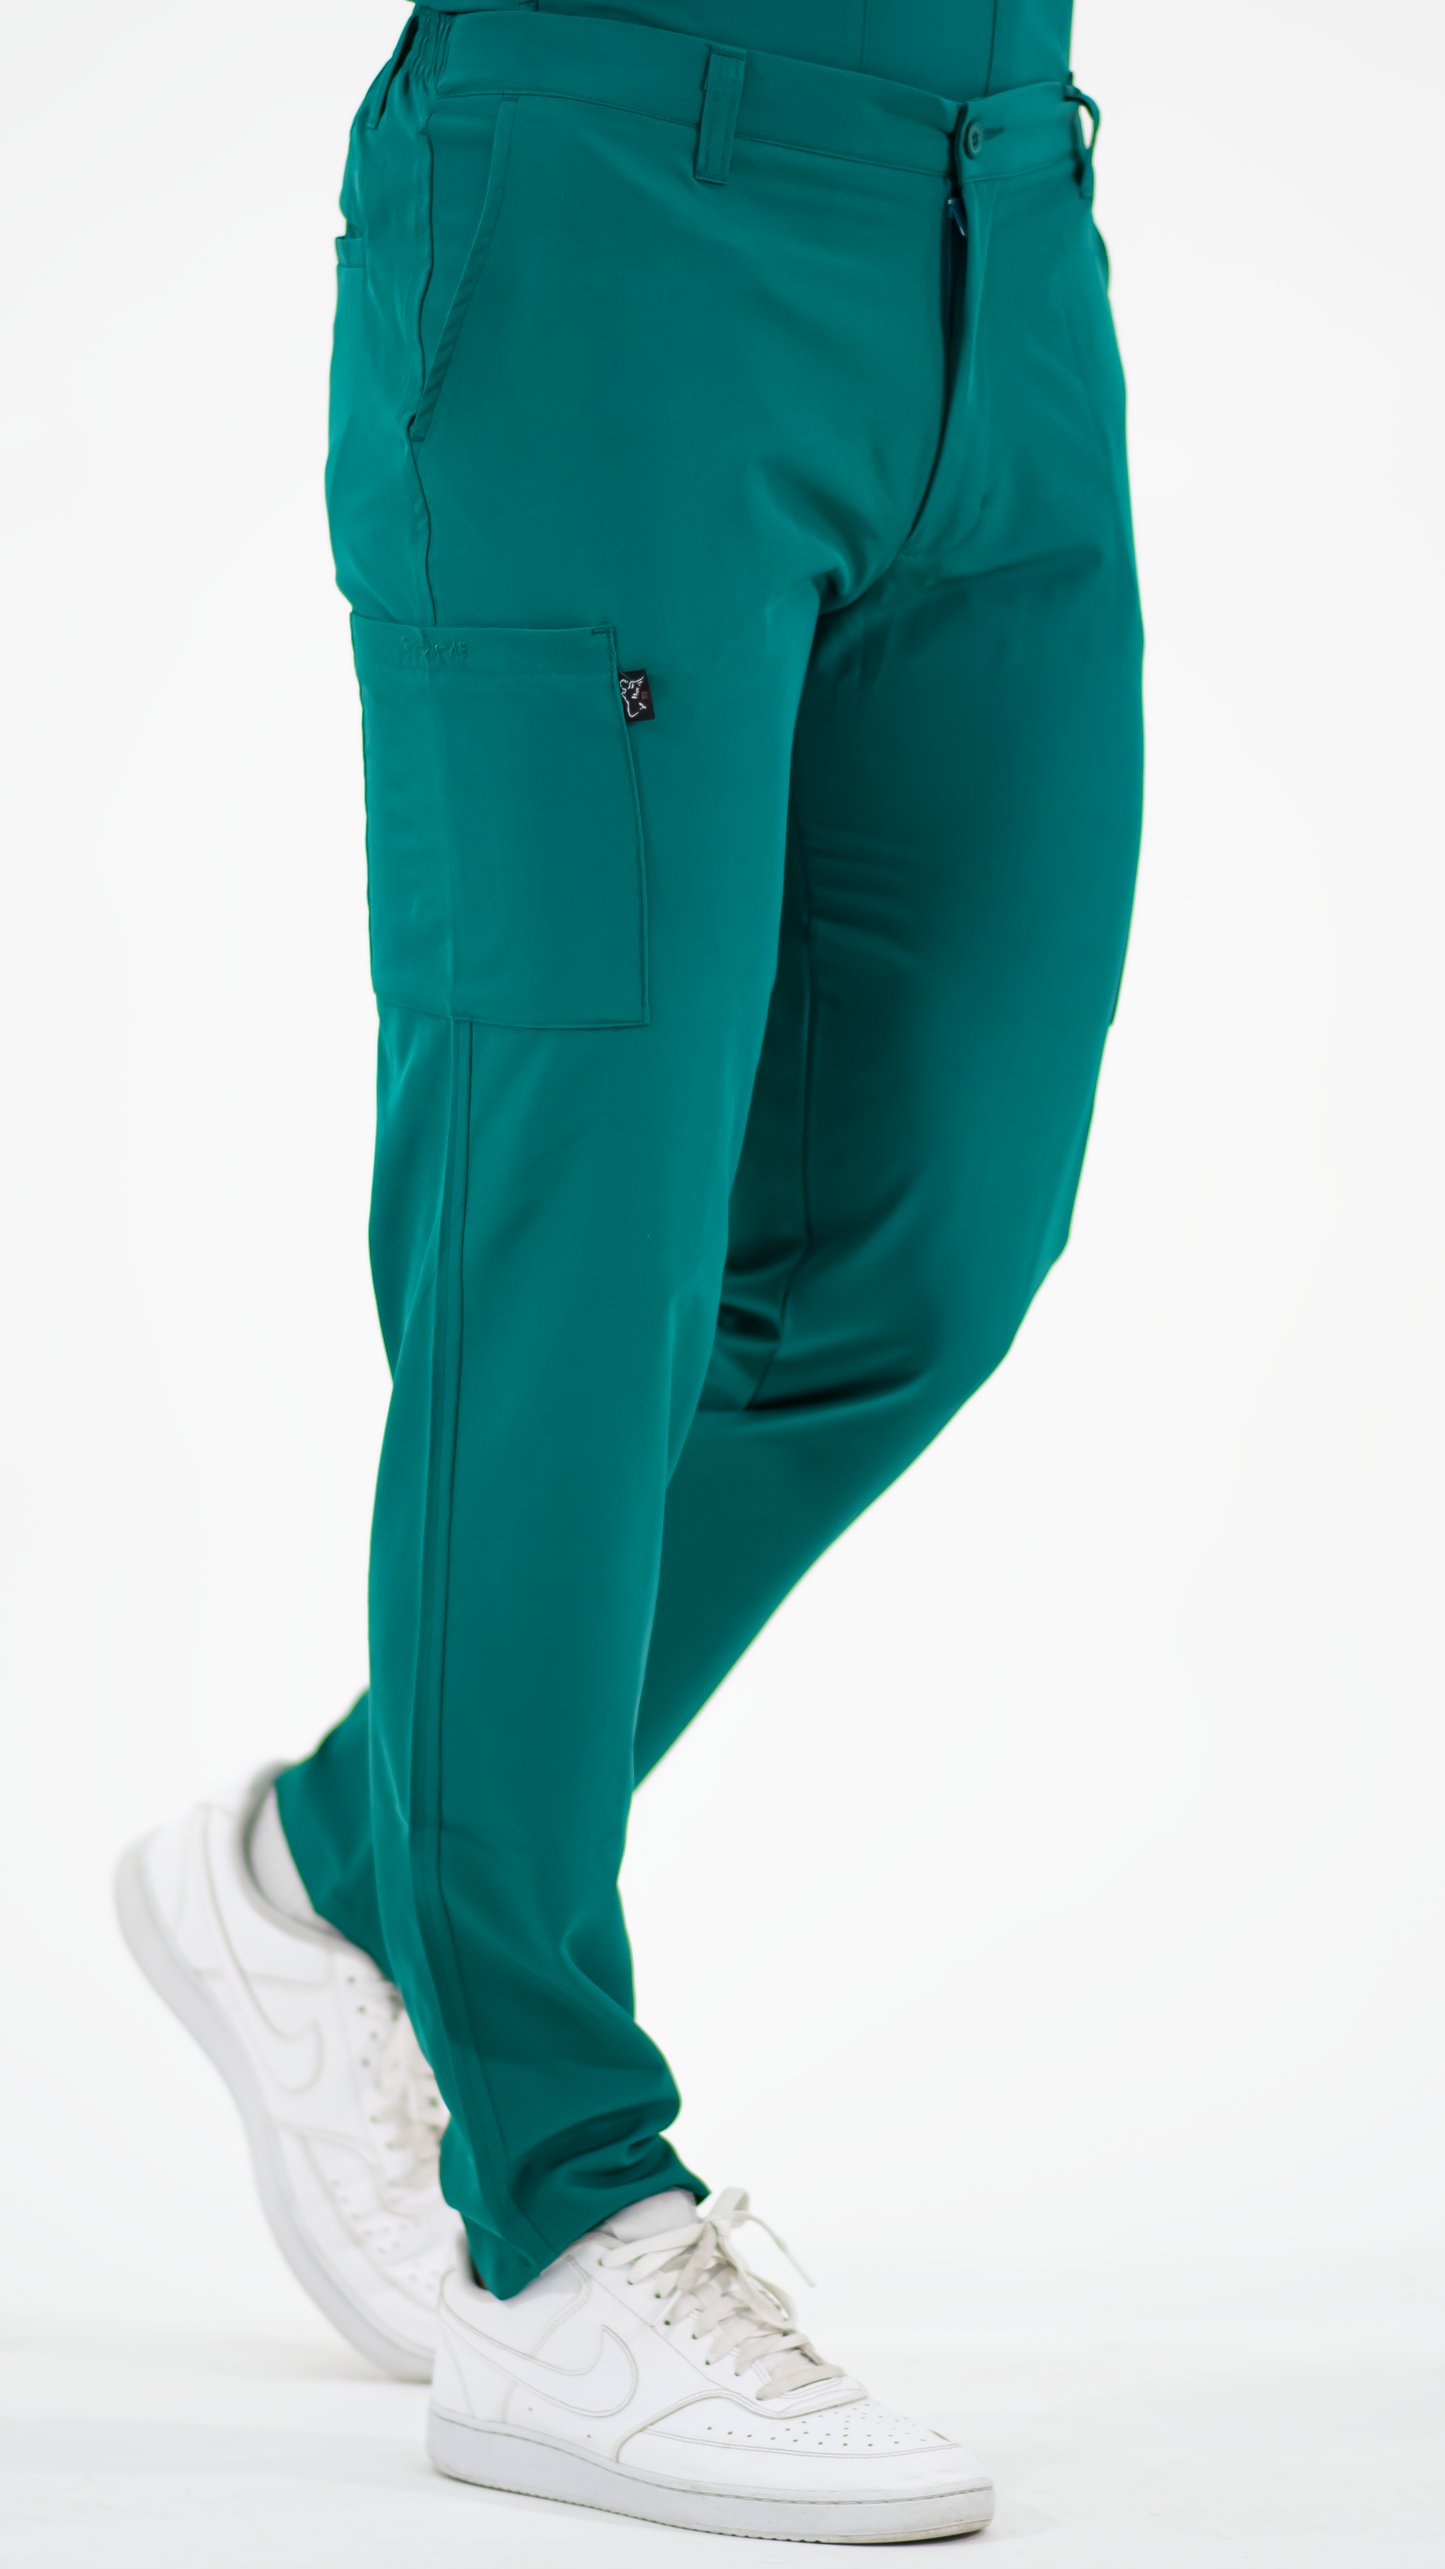 Pants Man Fways Green Turquoise 901